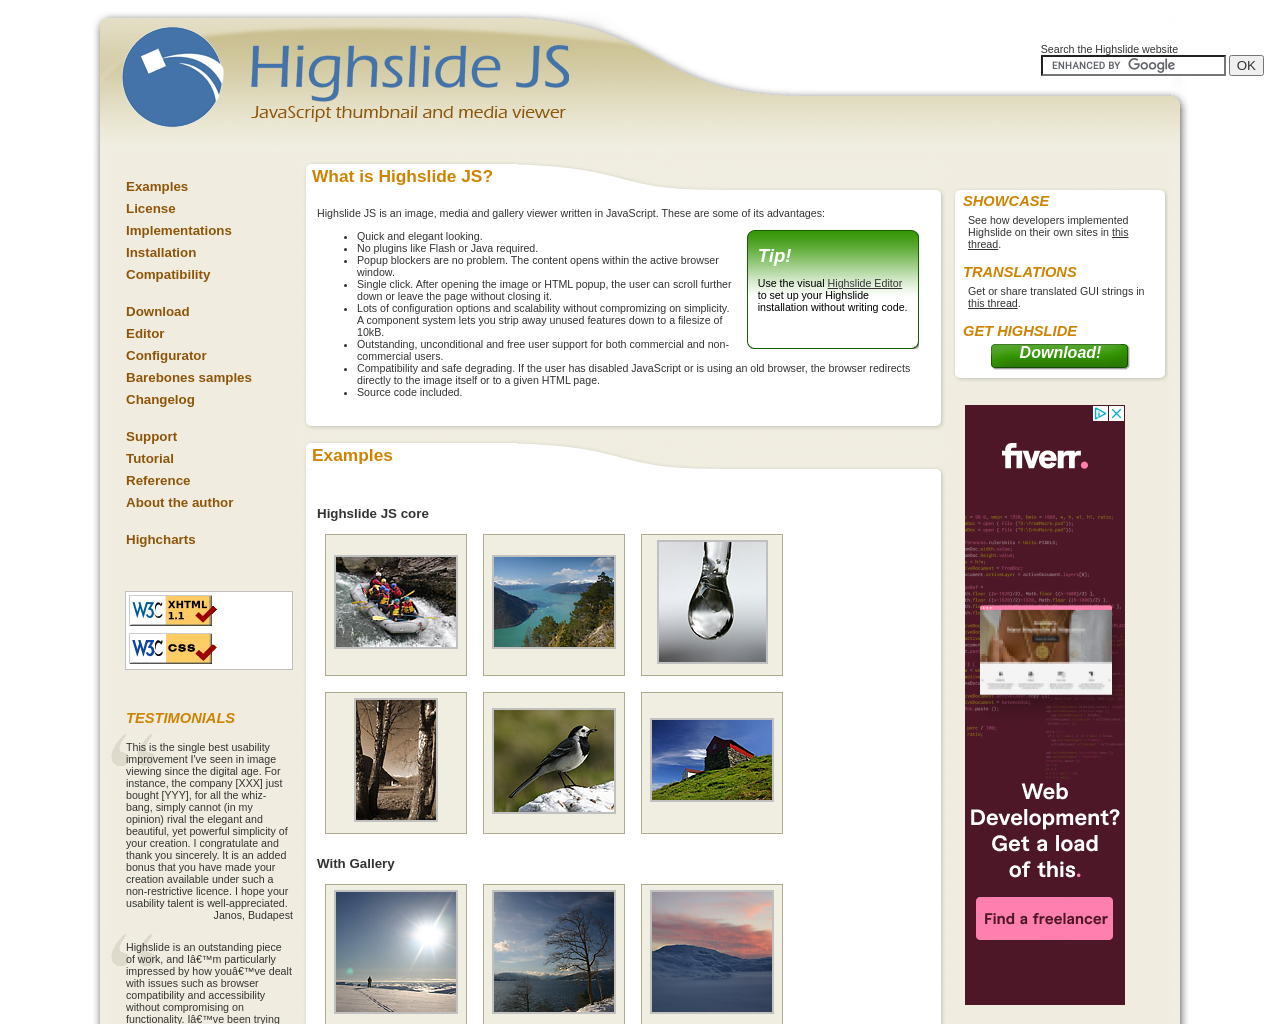 highslide.com